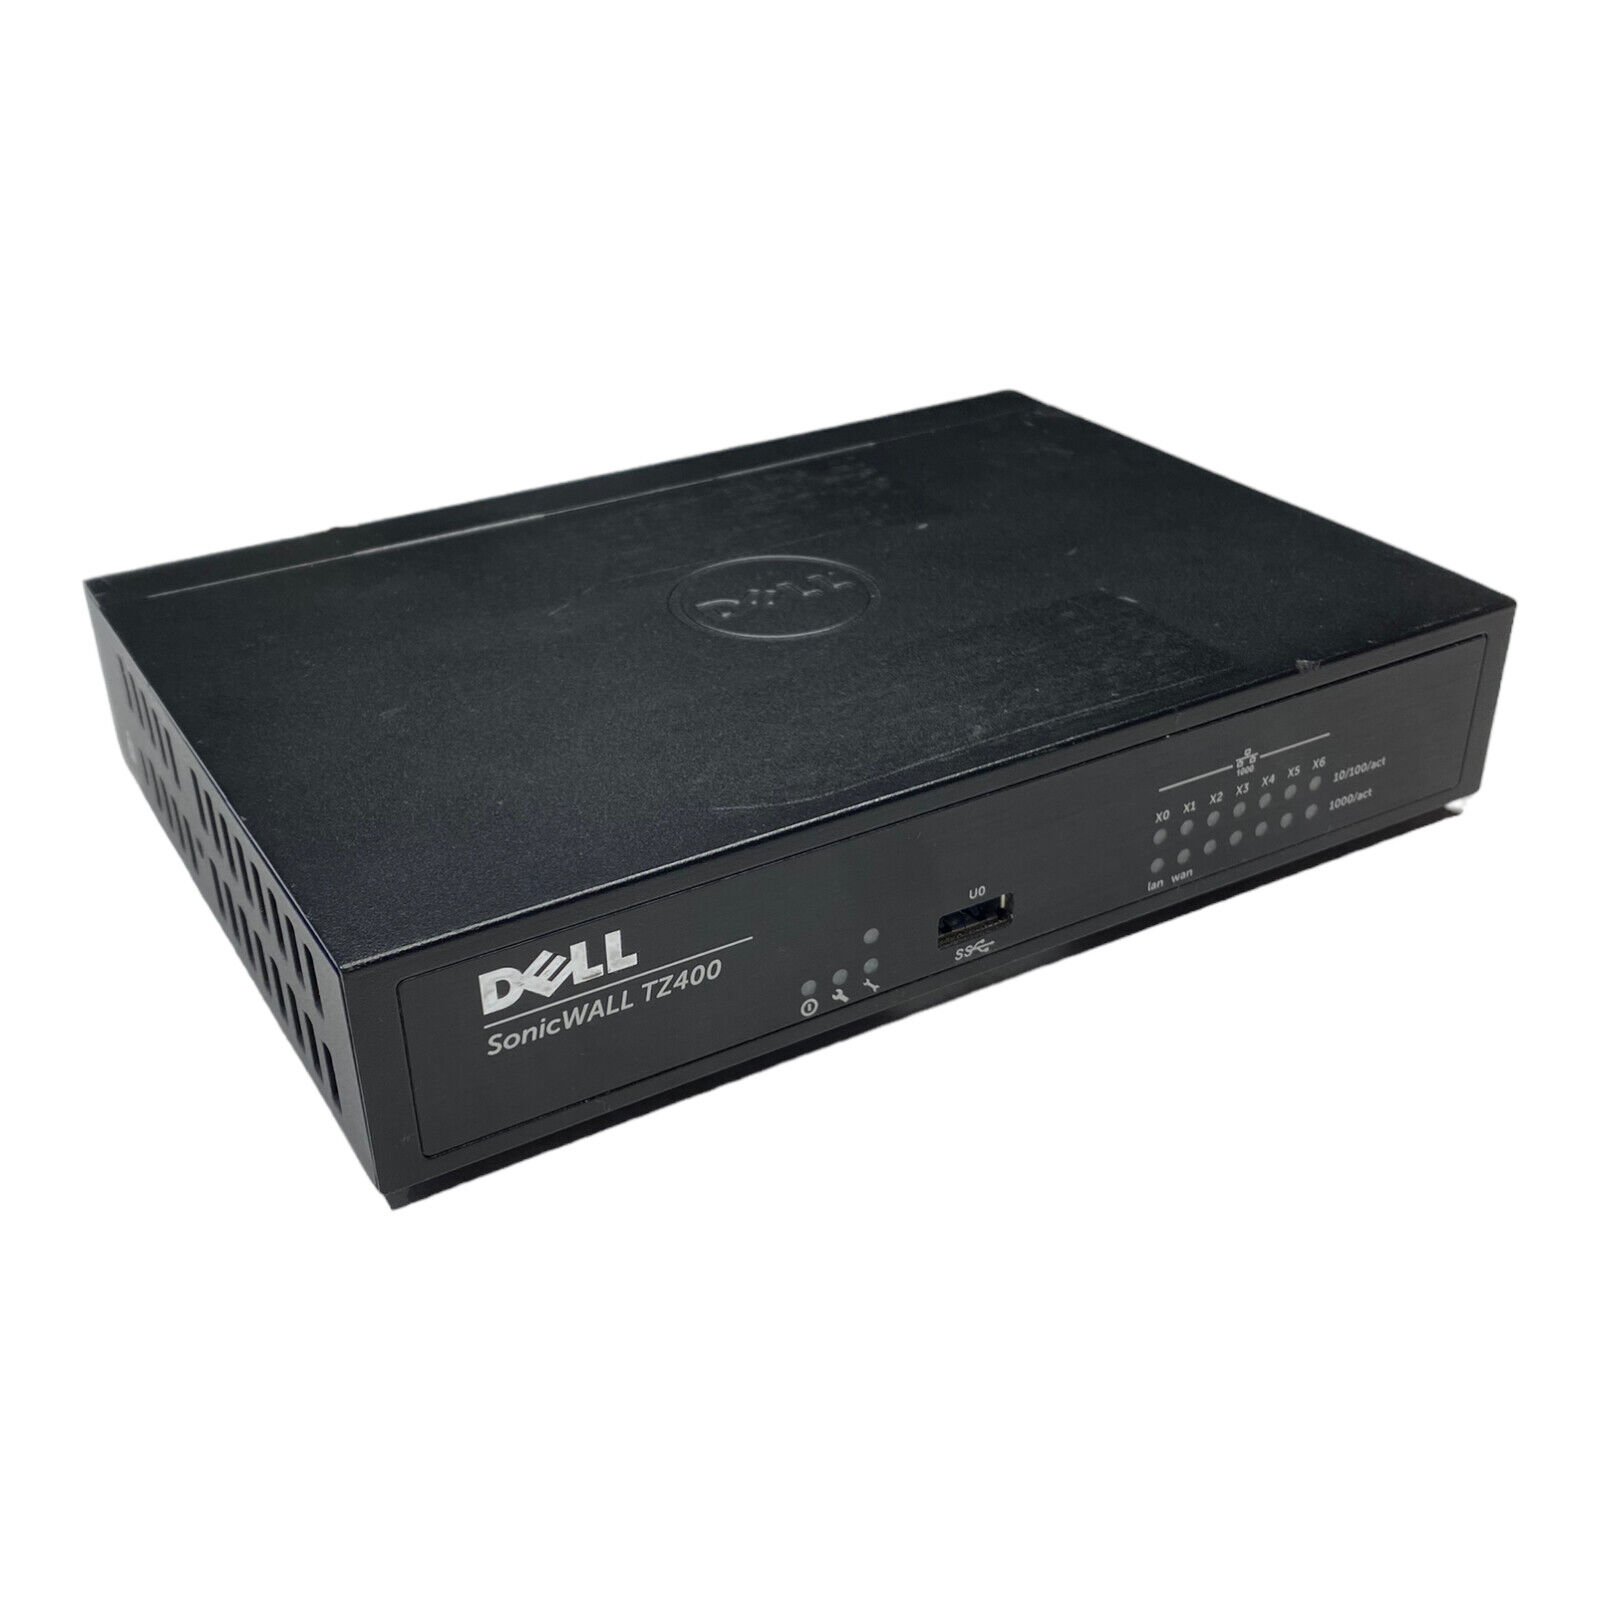 Dell SonicWall TZ400 Firewall Appliance